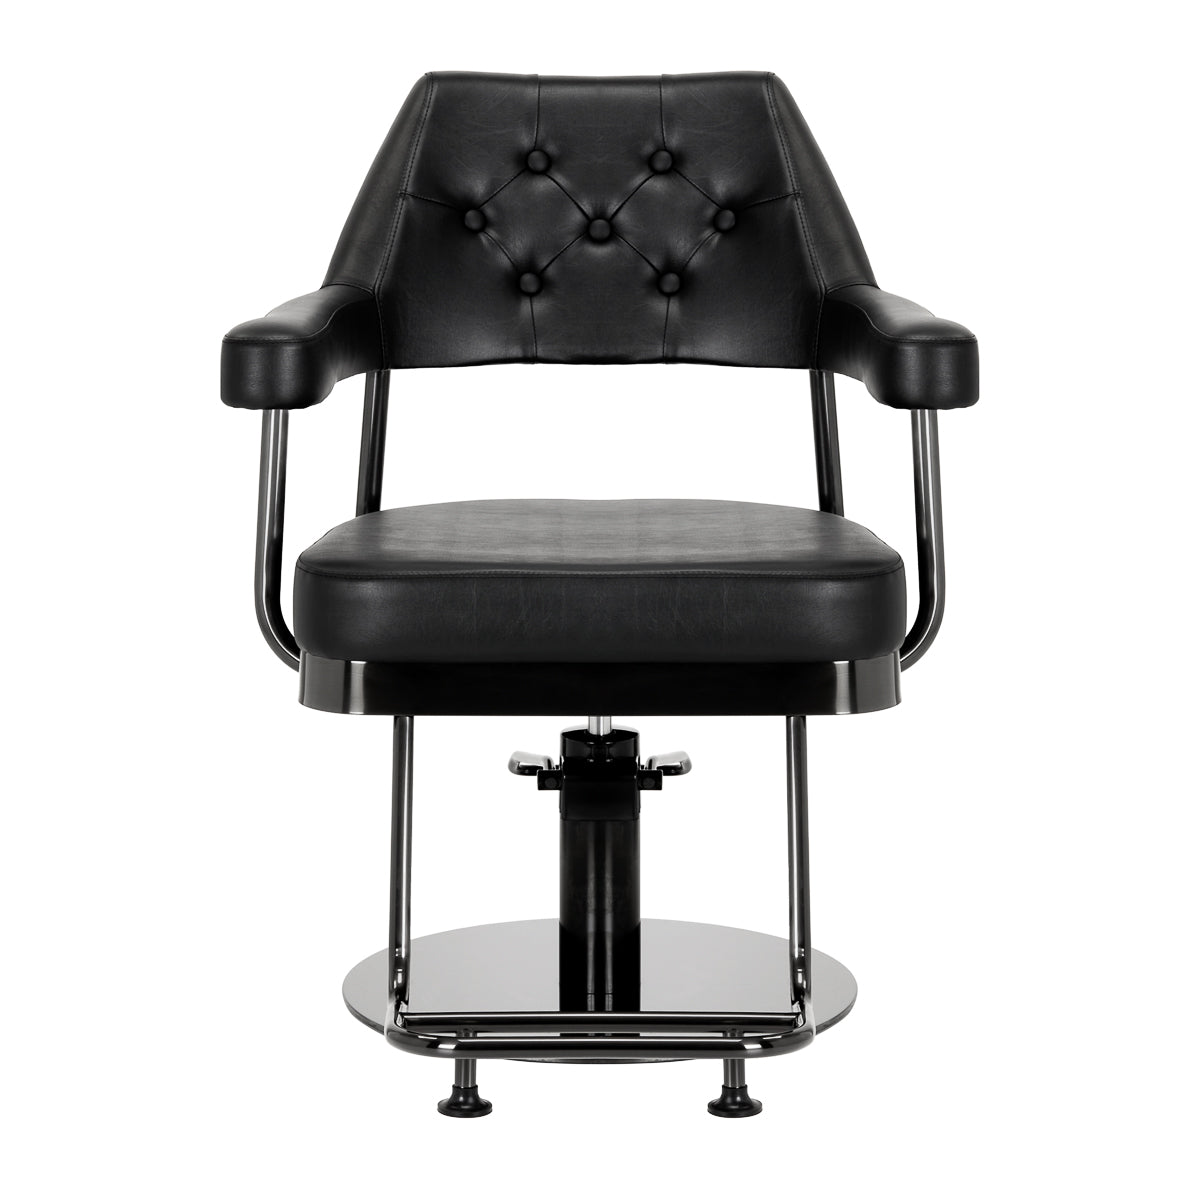 Gabbiano hairdressing chair Granda black